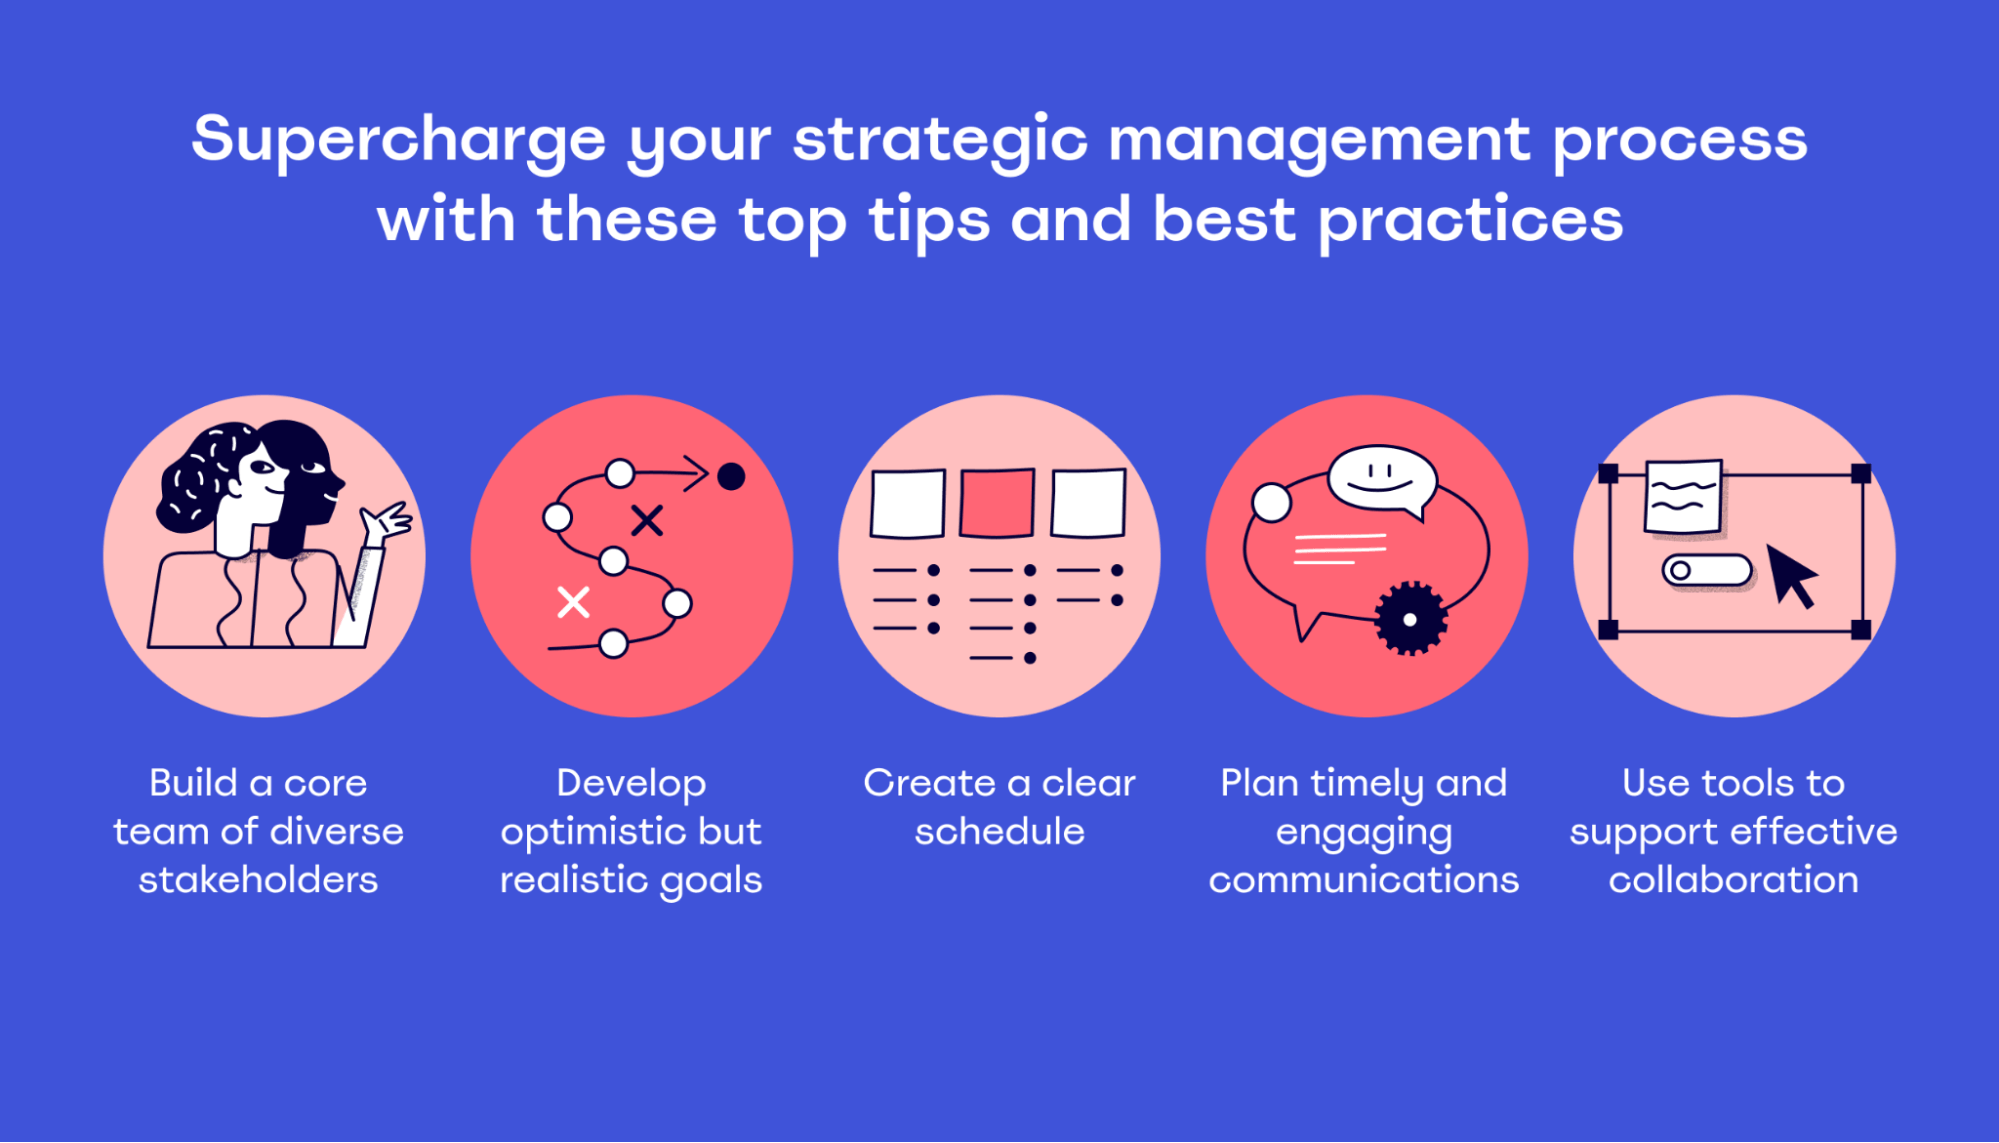 A list of strategic management best practices